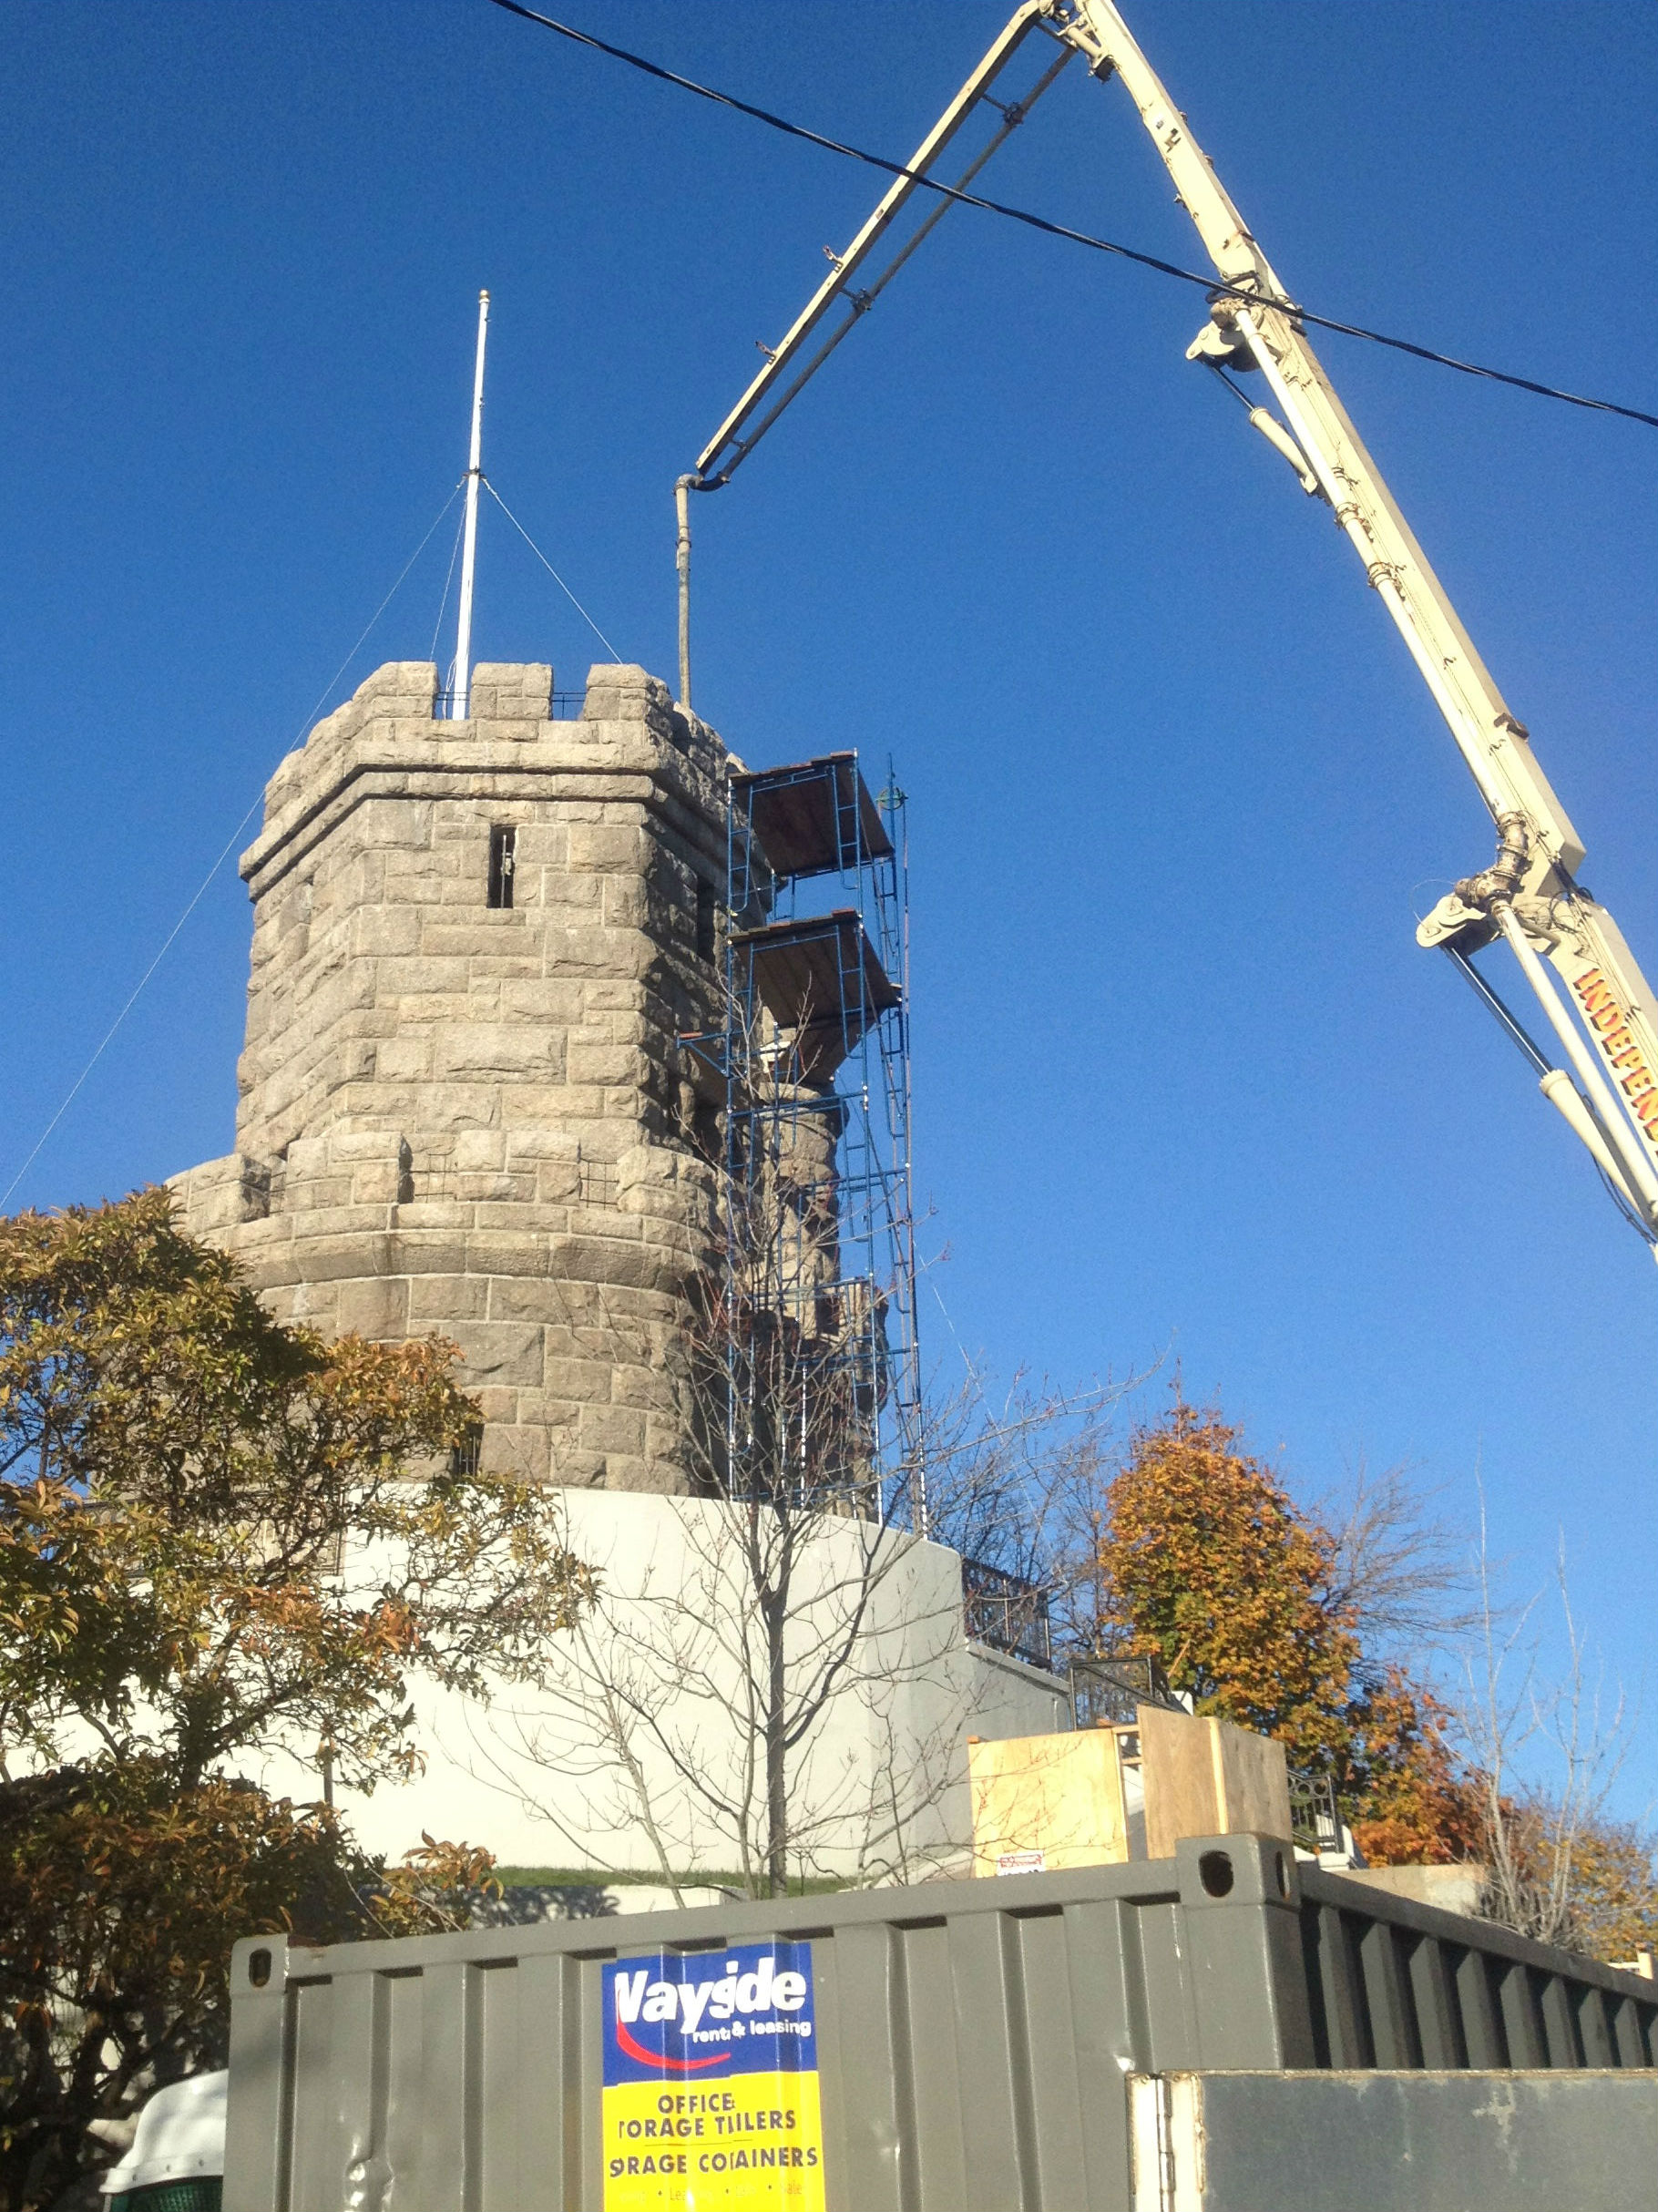 Prospect Hill Tower under construction, 2015 stabilization work